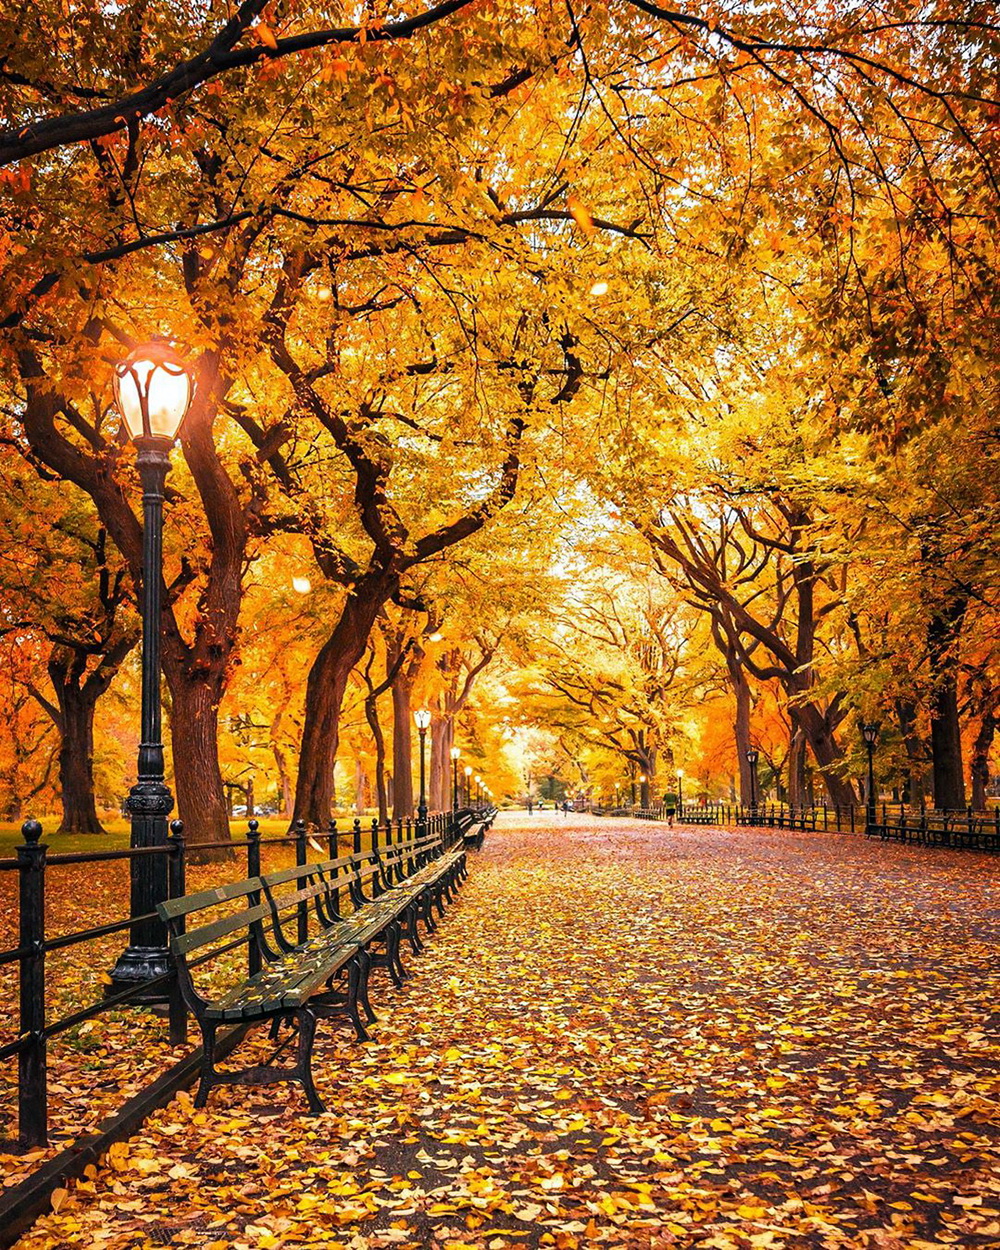 Осень в Нью-Йорке» (autumn in New York), 2000